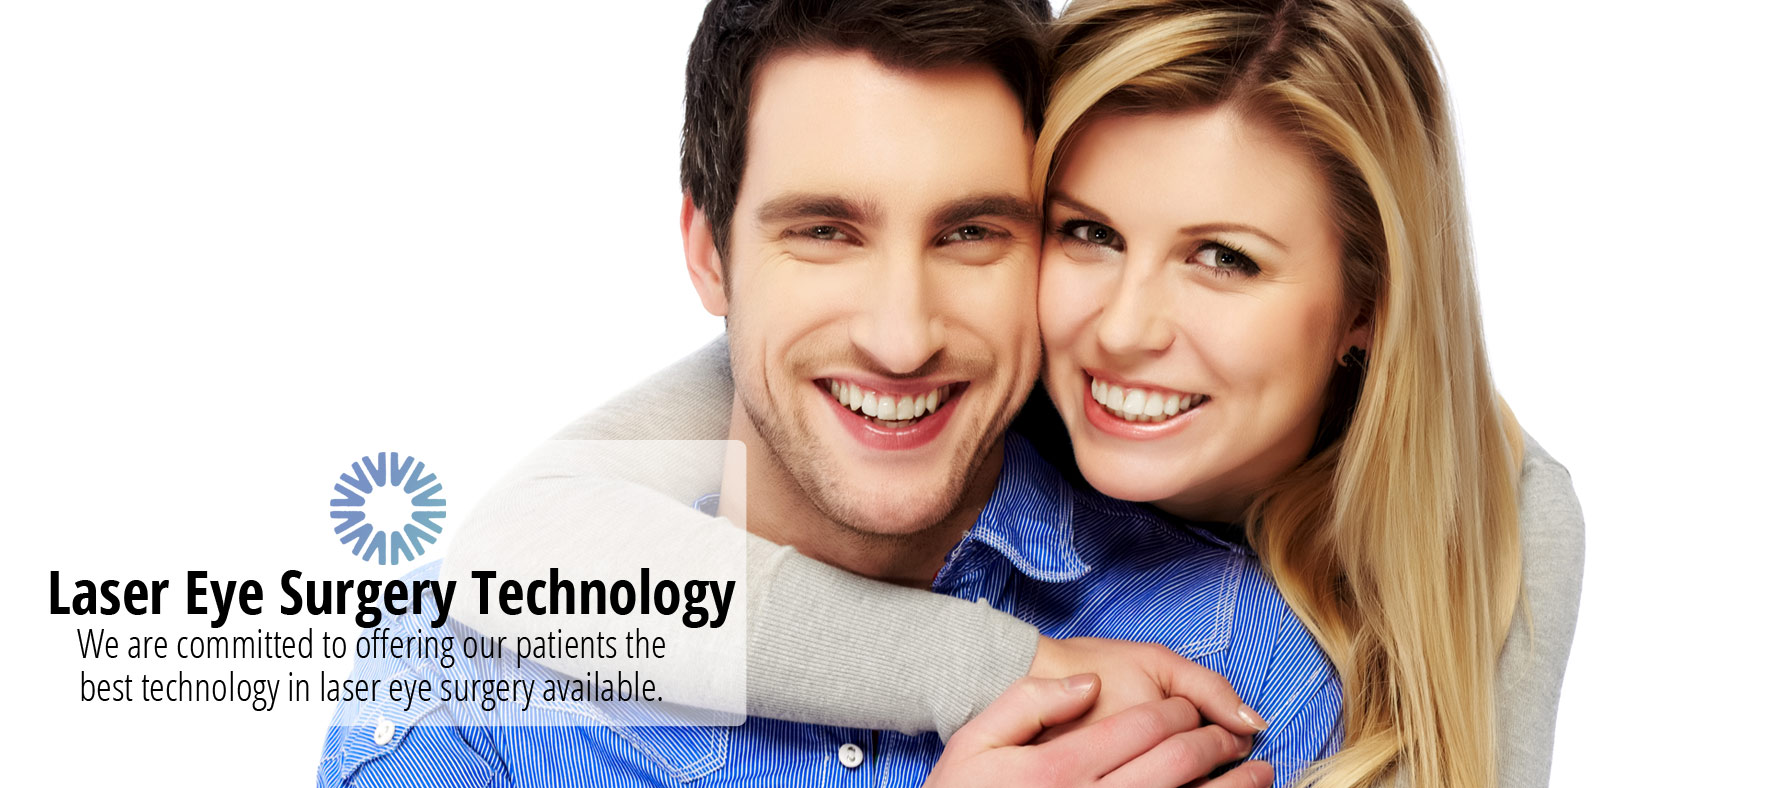 Laser Eye Surgery Technology Header Image